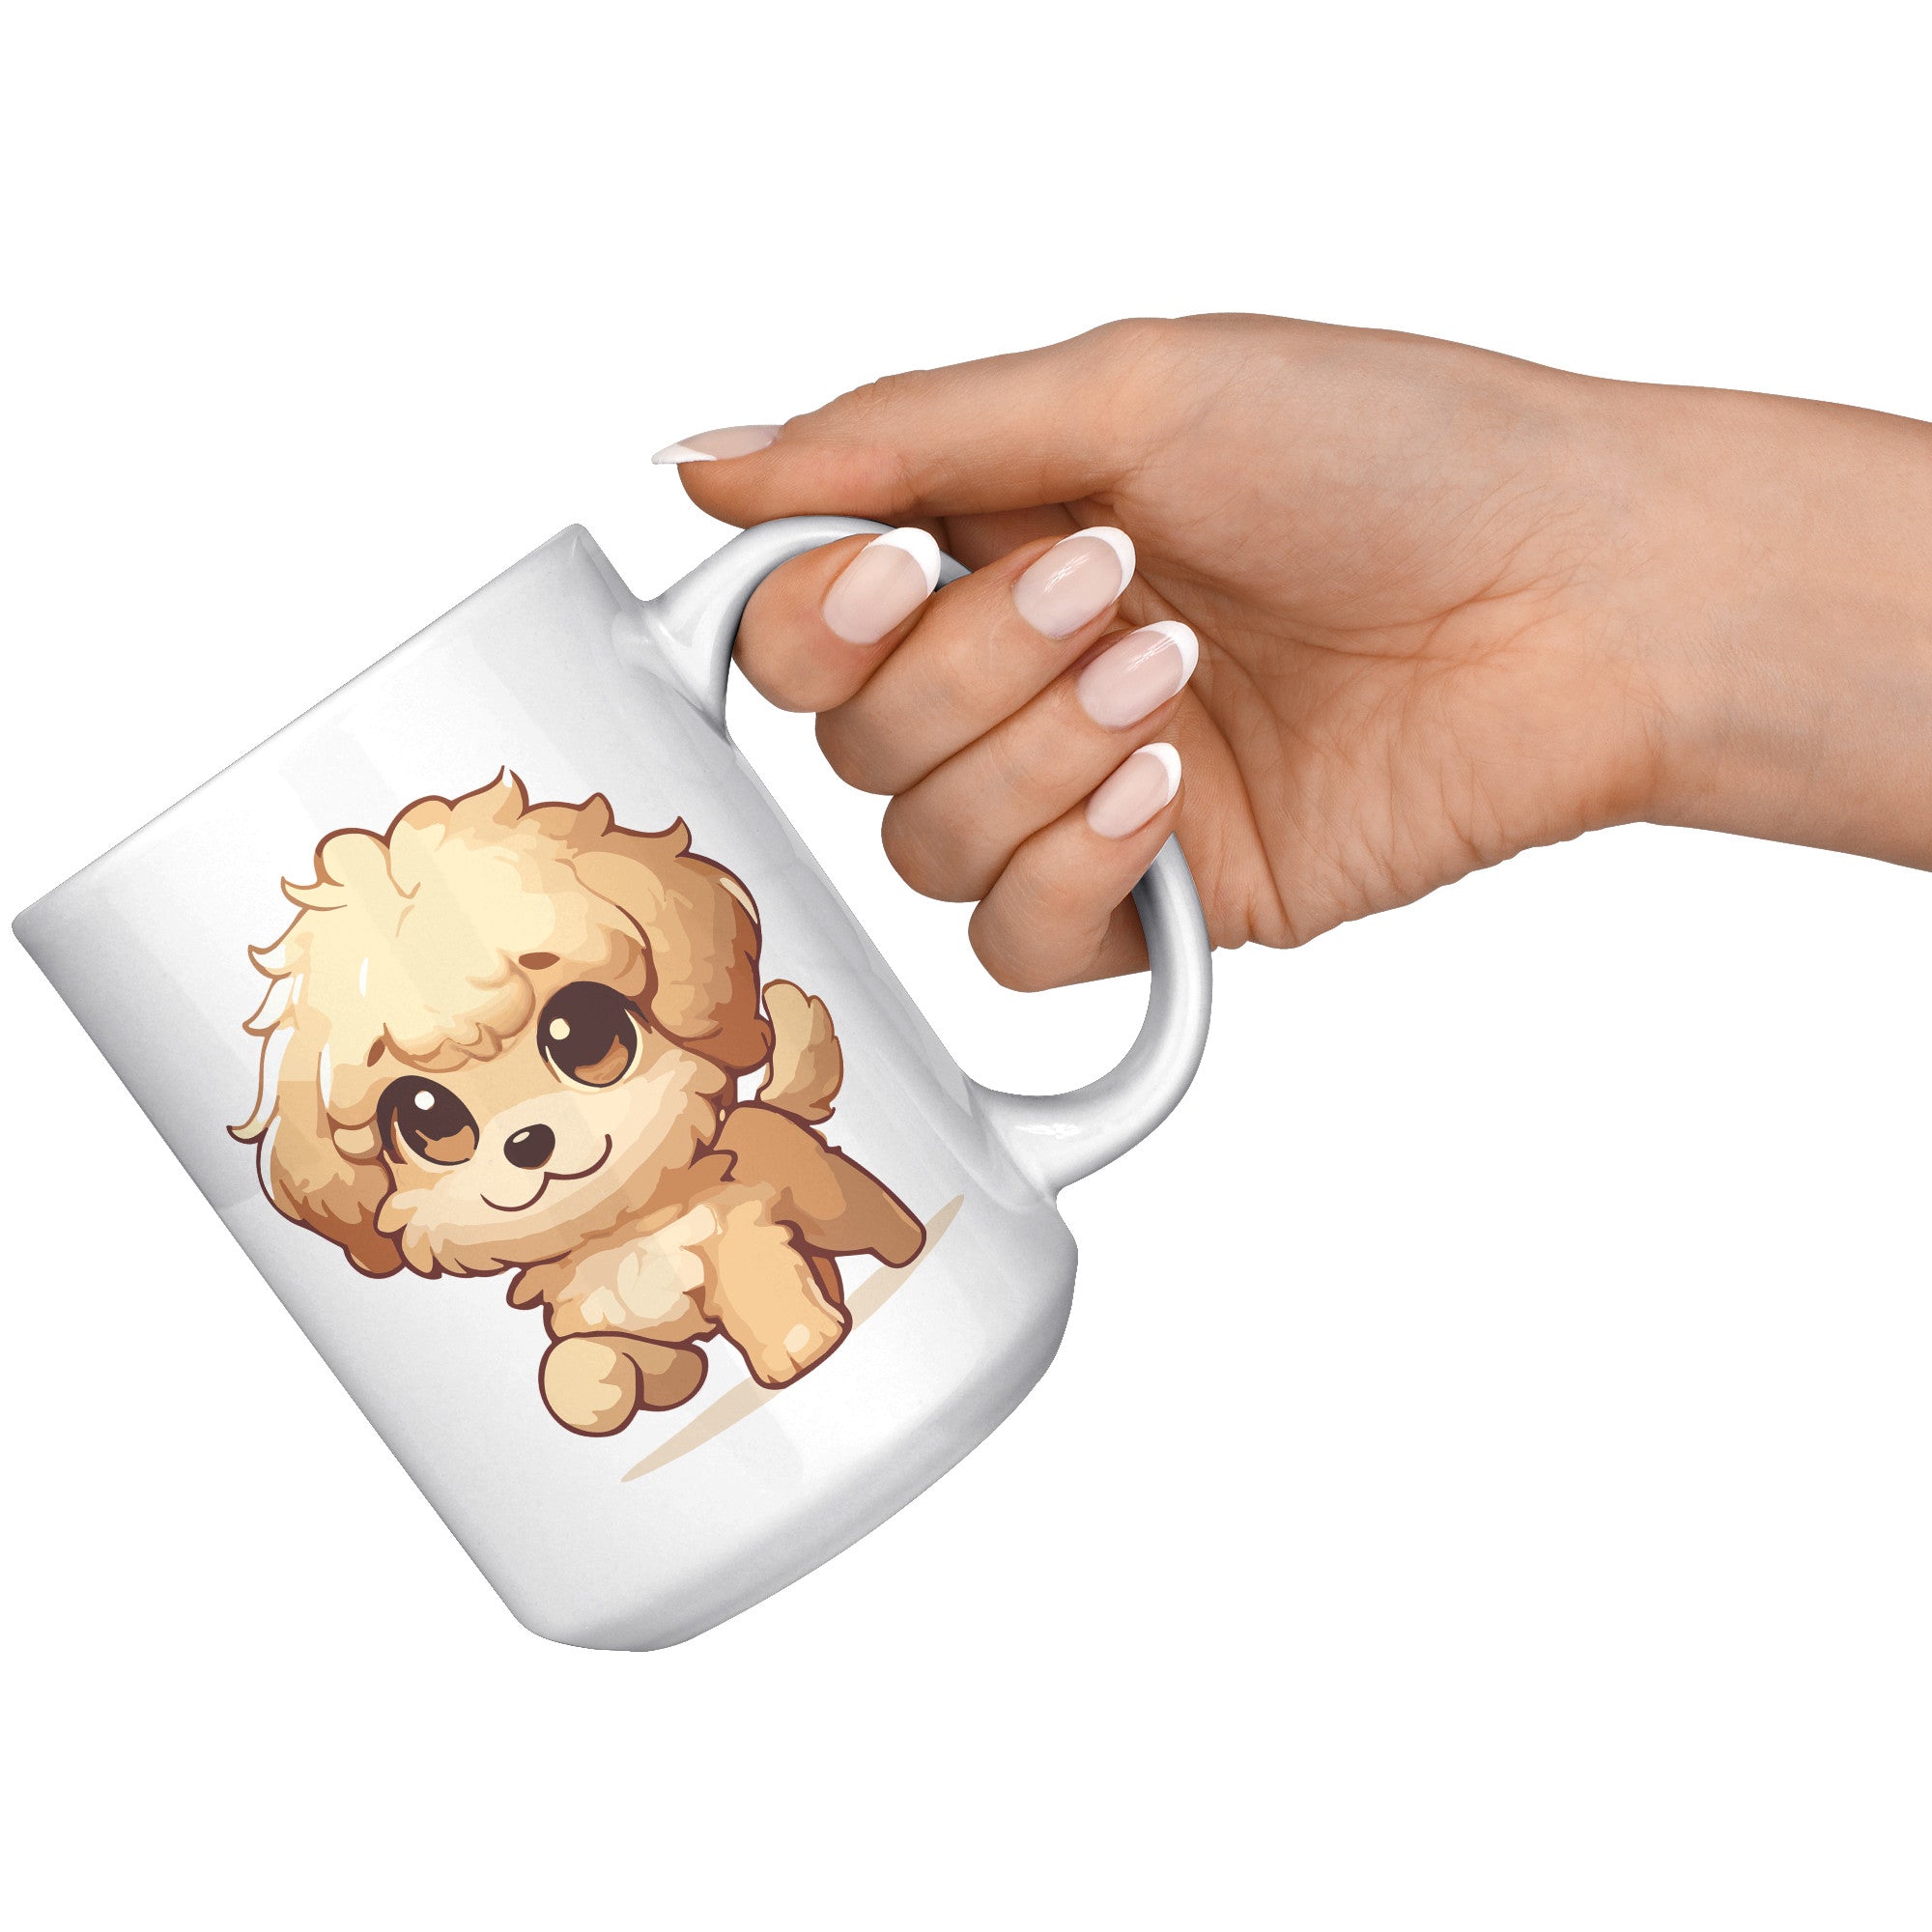 15oz Golden Retriever Cartoon Coffee Mug - Heartwarming Dog Lover Coffee Mug - Perfect Gift for Golden Owners - Friendly Pup Coffee Mug - Q1